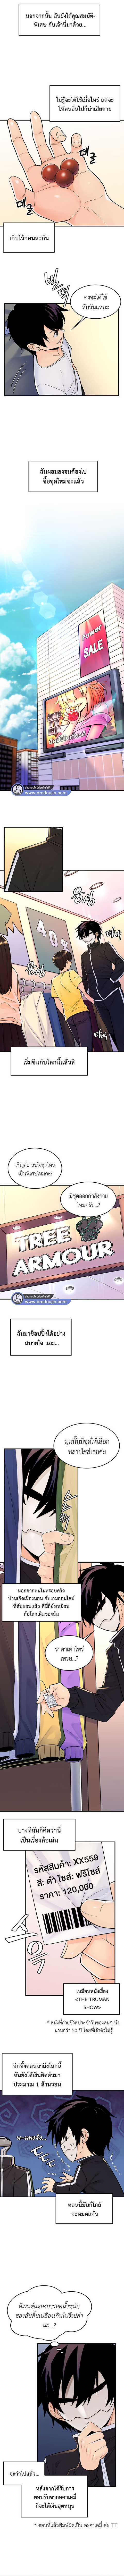 tree 002 00006